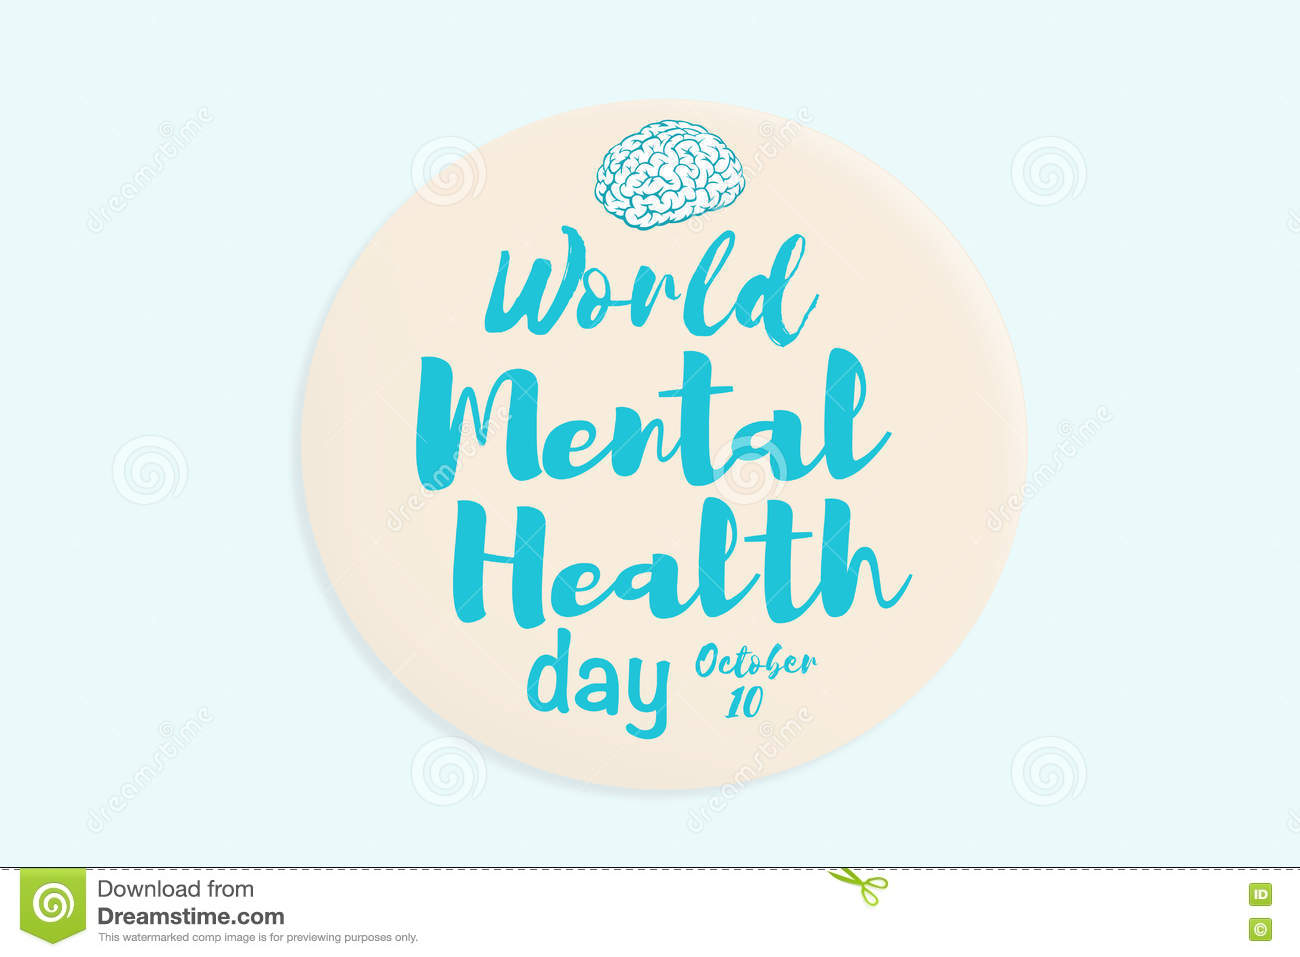 World Mental Health Day October 10 Illustration